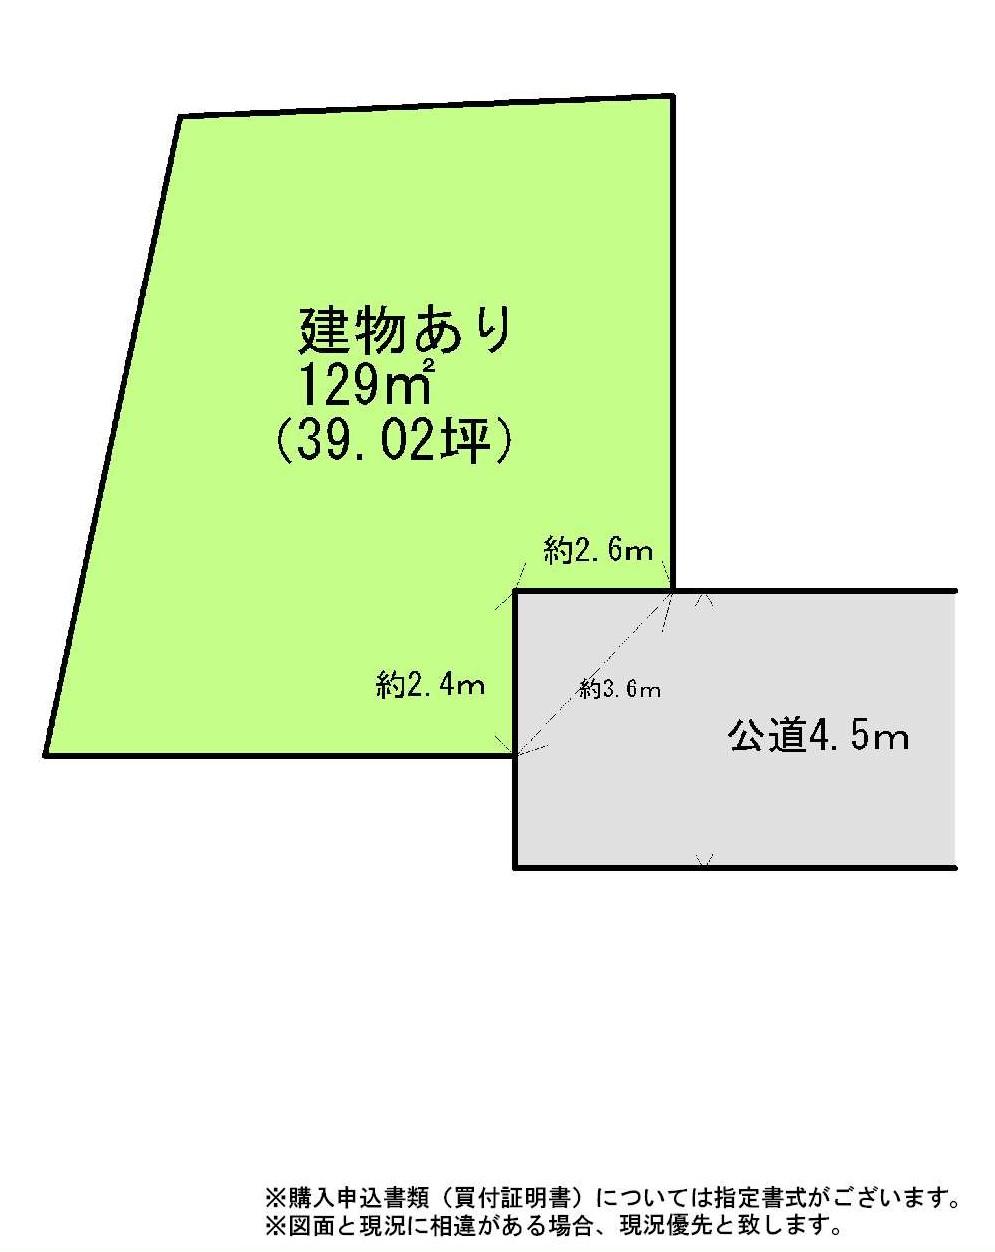 Compartment figure. Land price 12.8 million yen, Land area 129 sq m